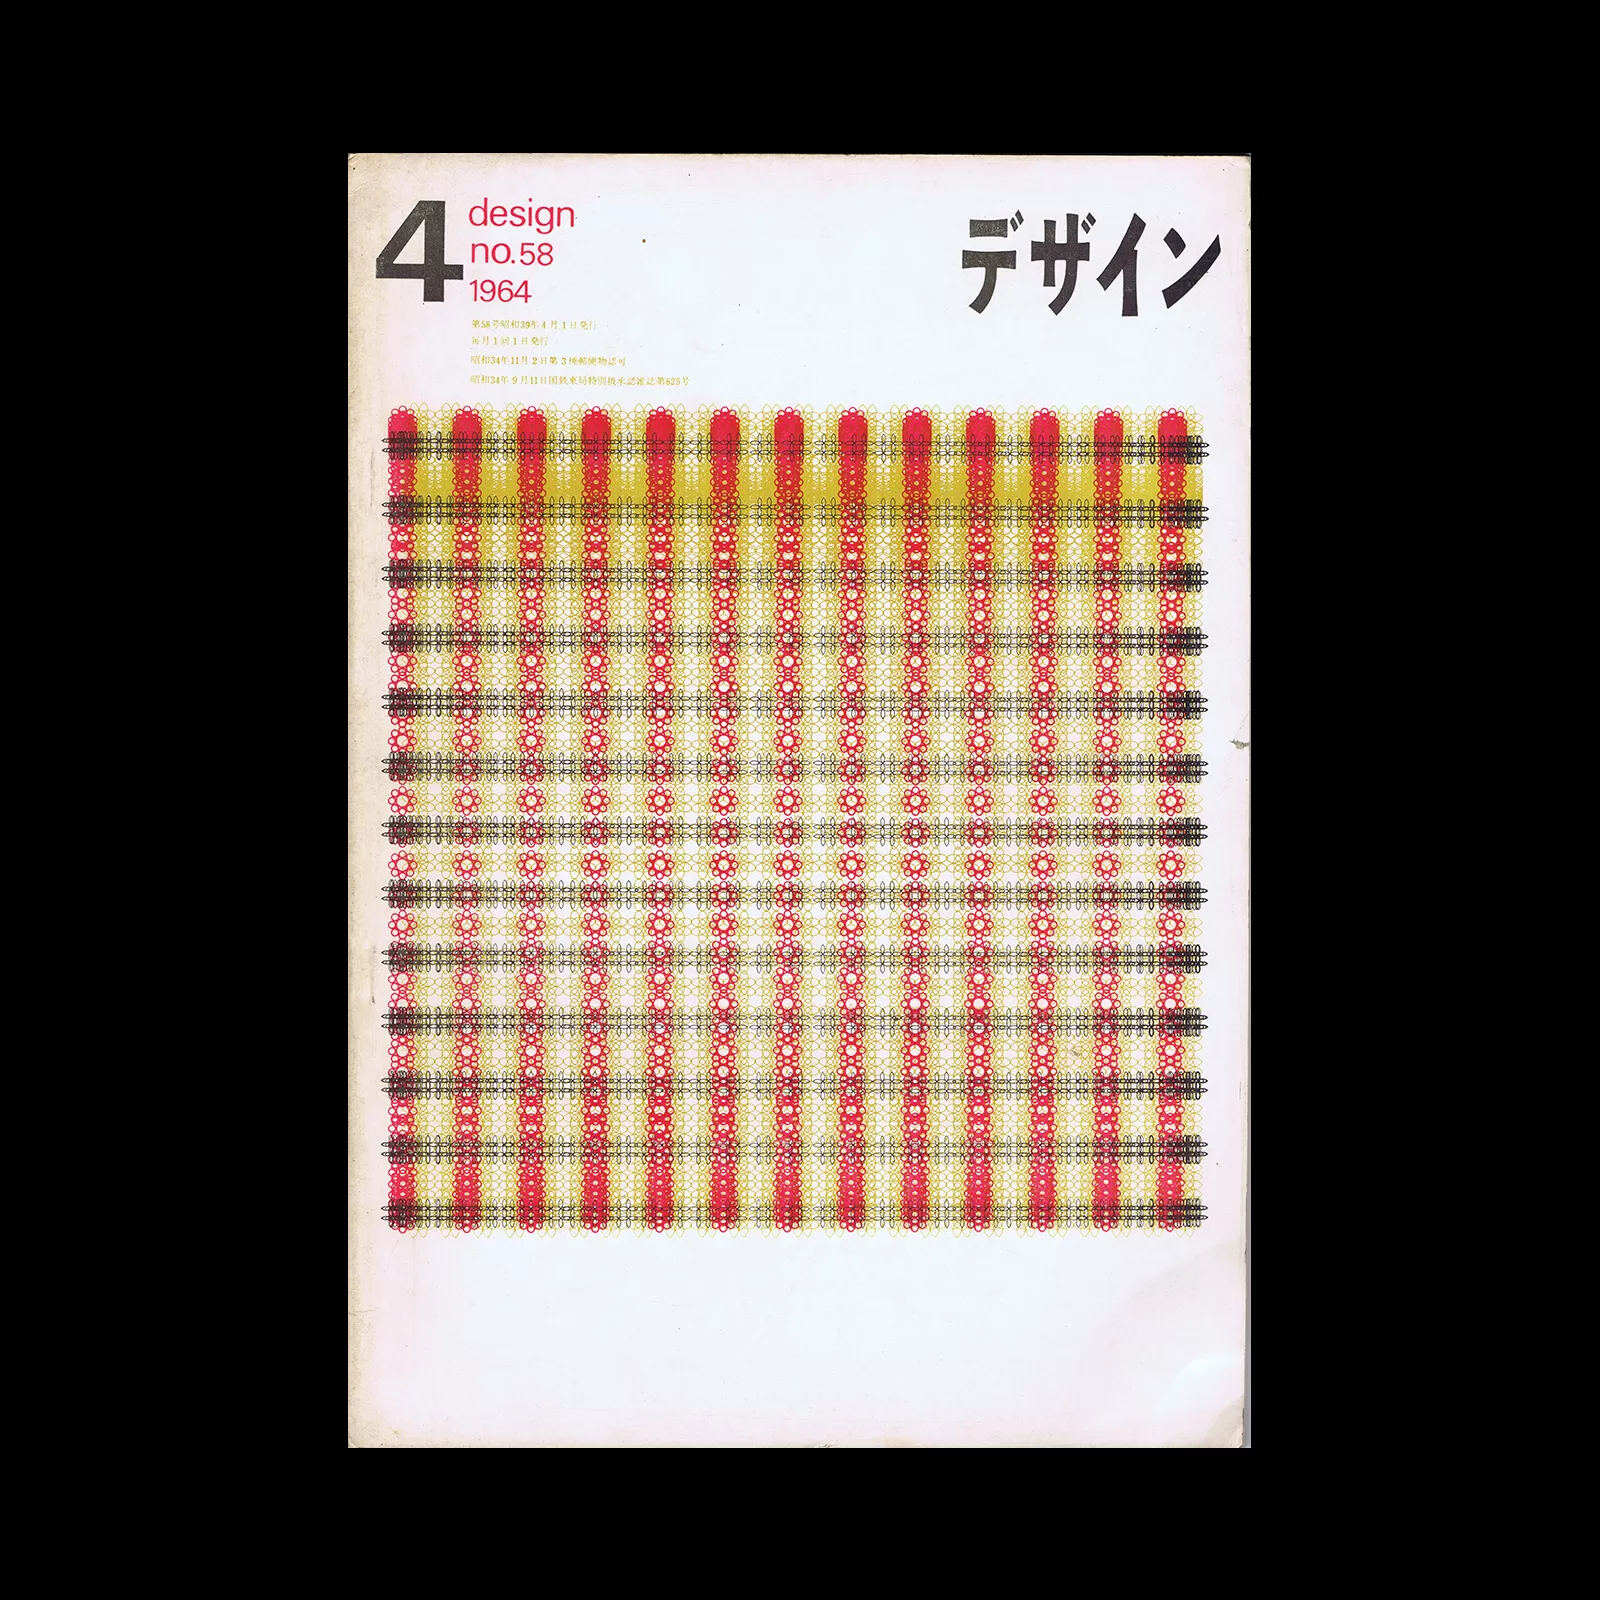 Design (Japan), 58, 1964 Cover design by Kohei Sugiura